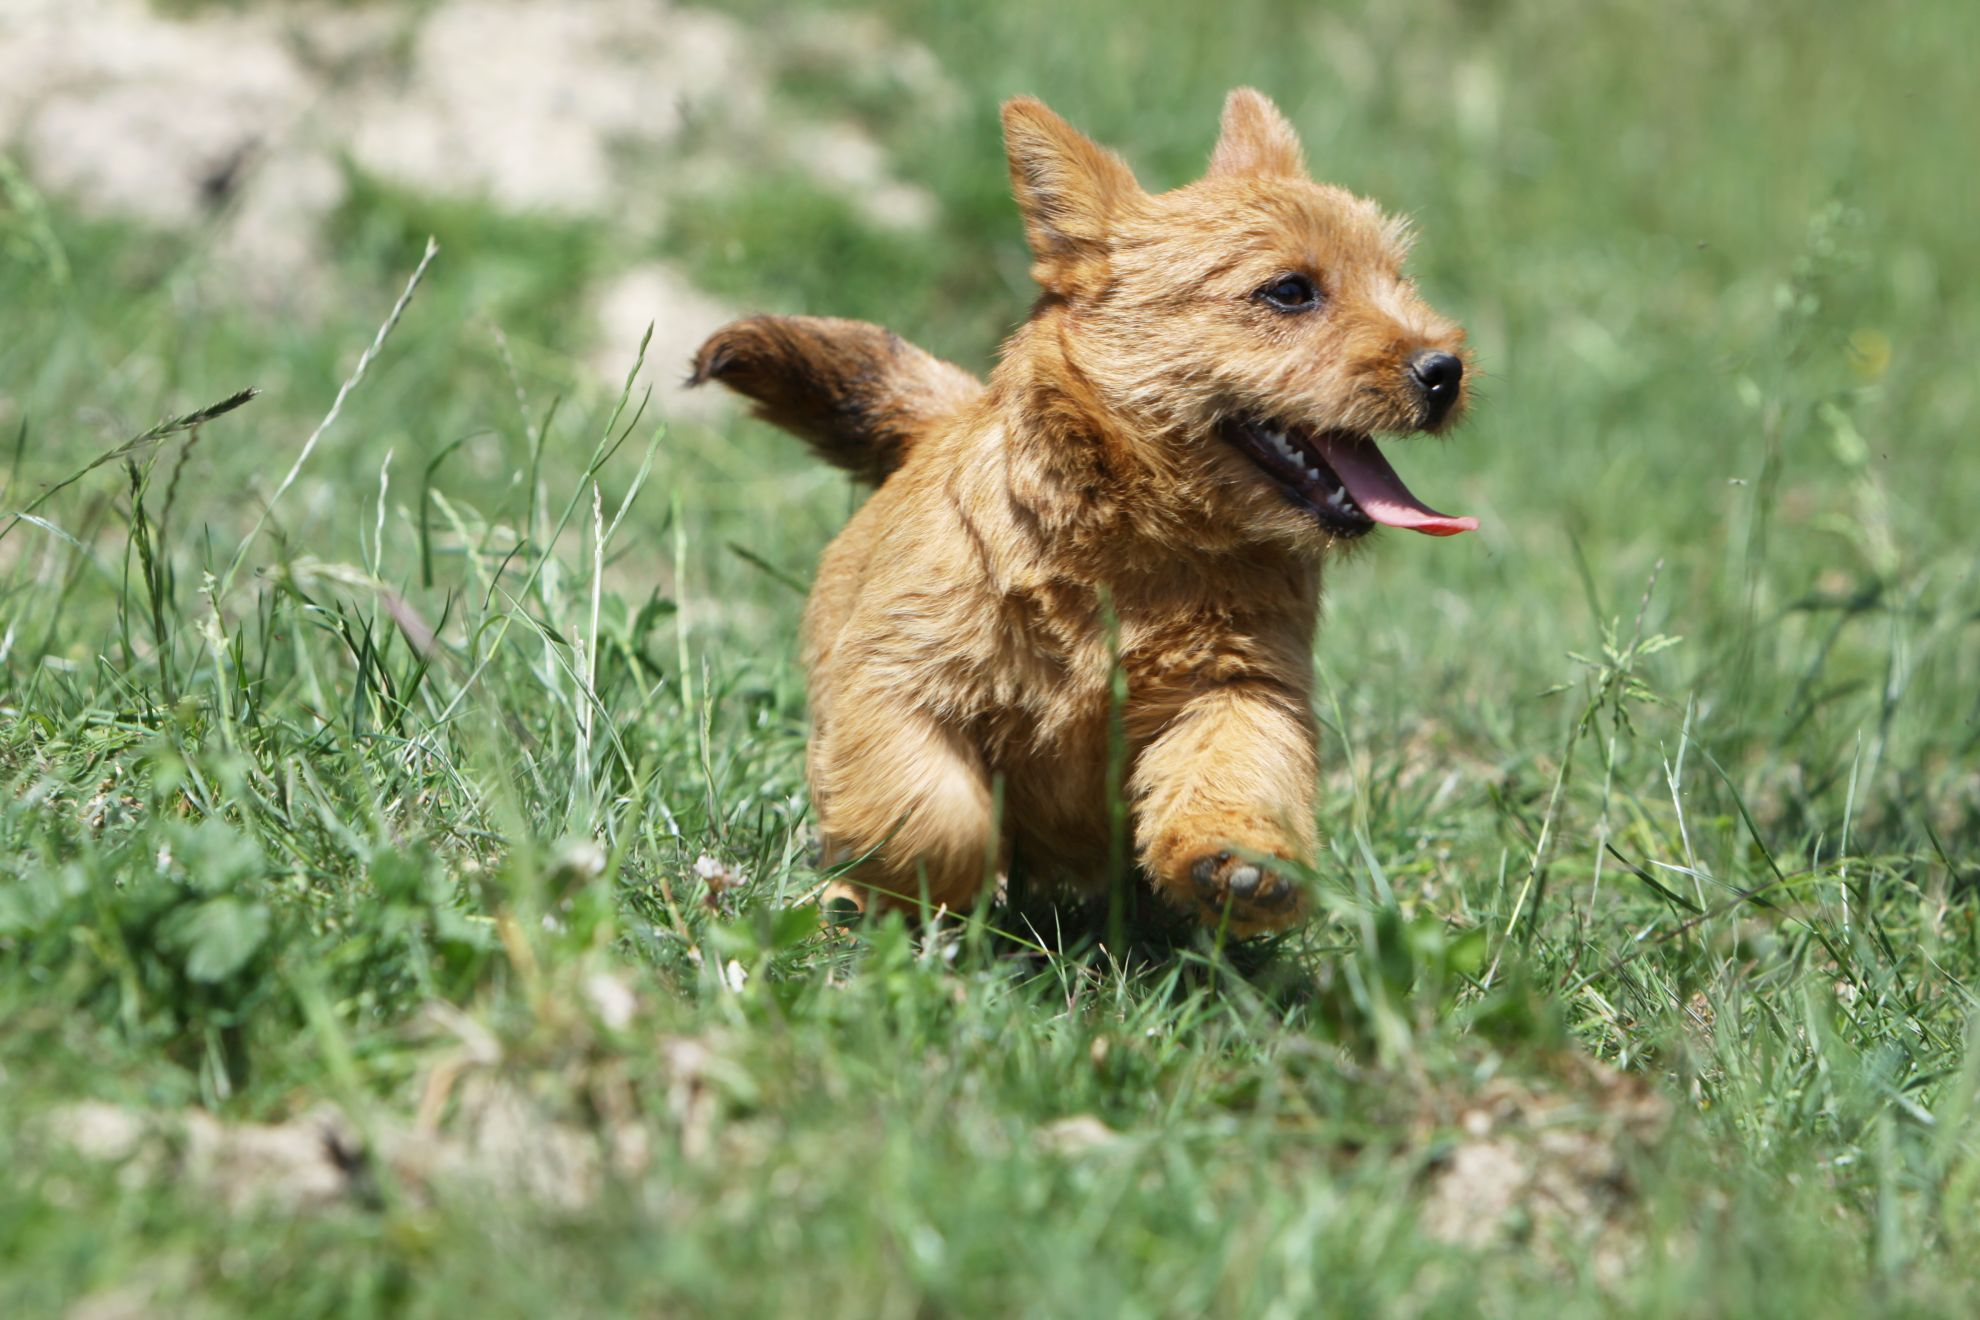 Norwich Terrier running towards camera over grass